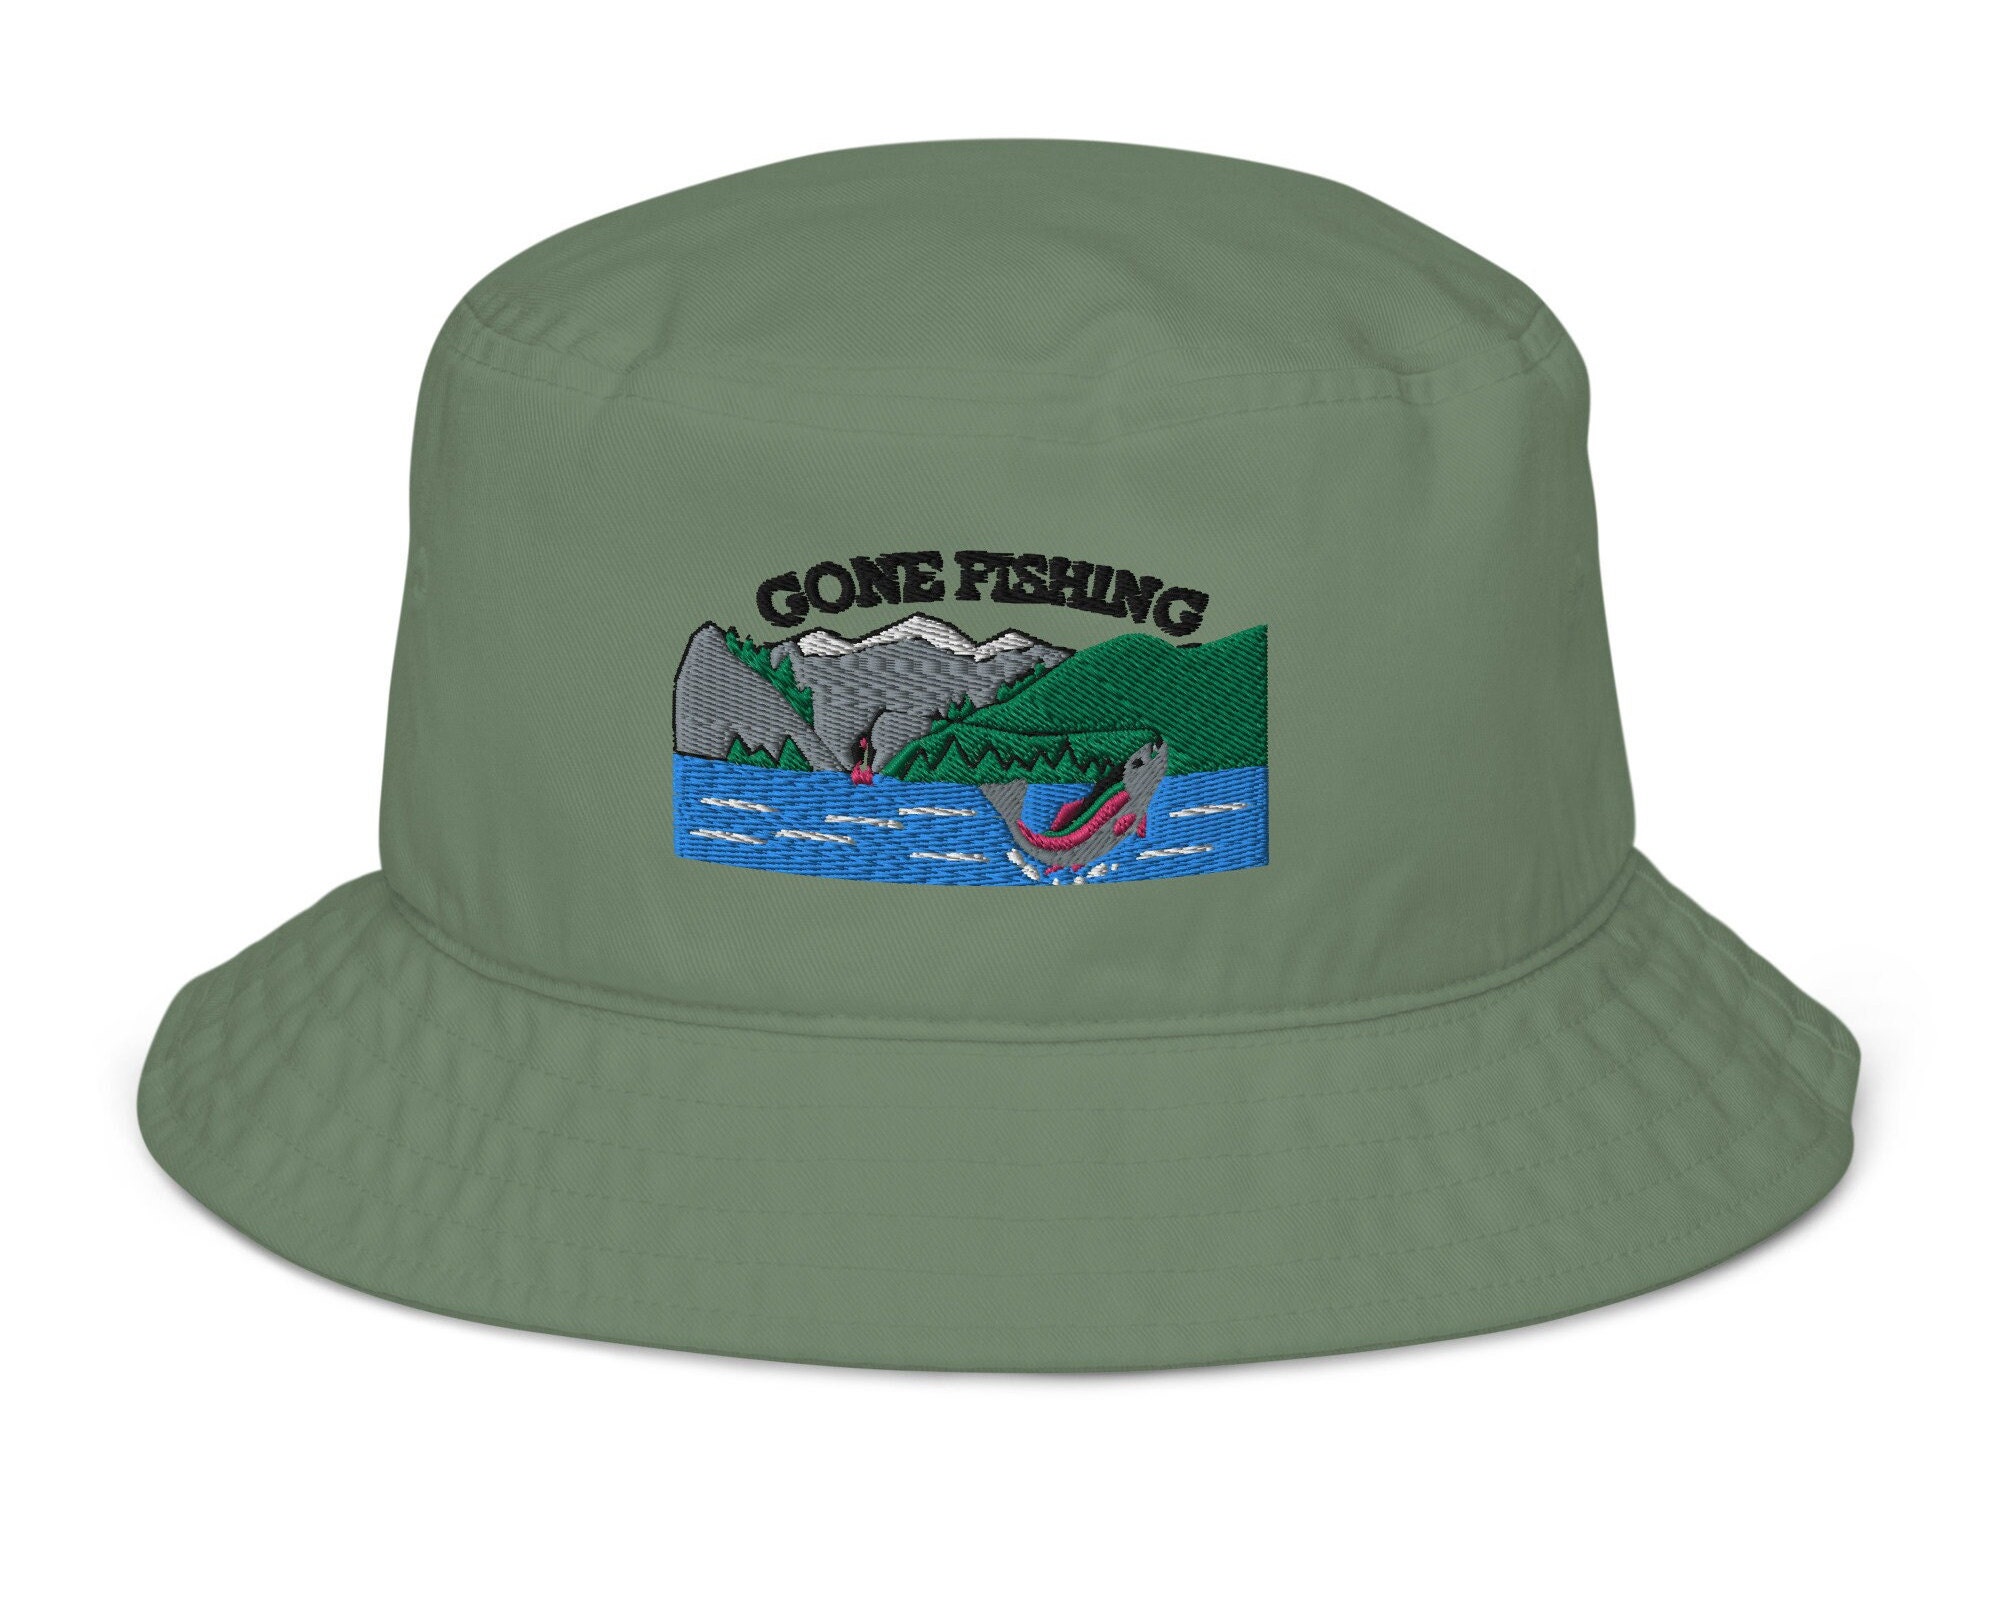 Embroidered Fishing Bucket Hat, Gone Fishing Bucket Hat, Fly Fishing Bucket  Hat, Camping Bucket Hat, Hiking Bucket Hat 